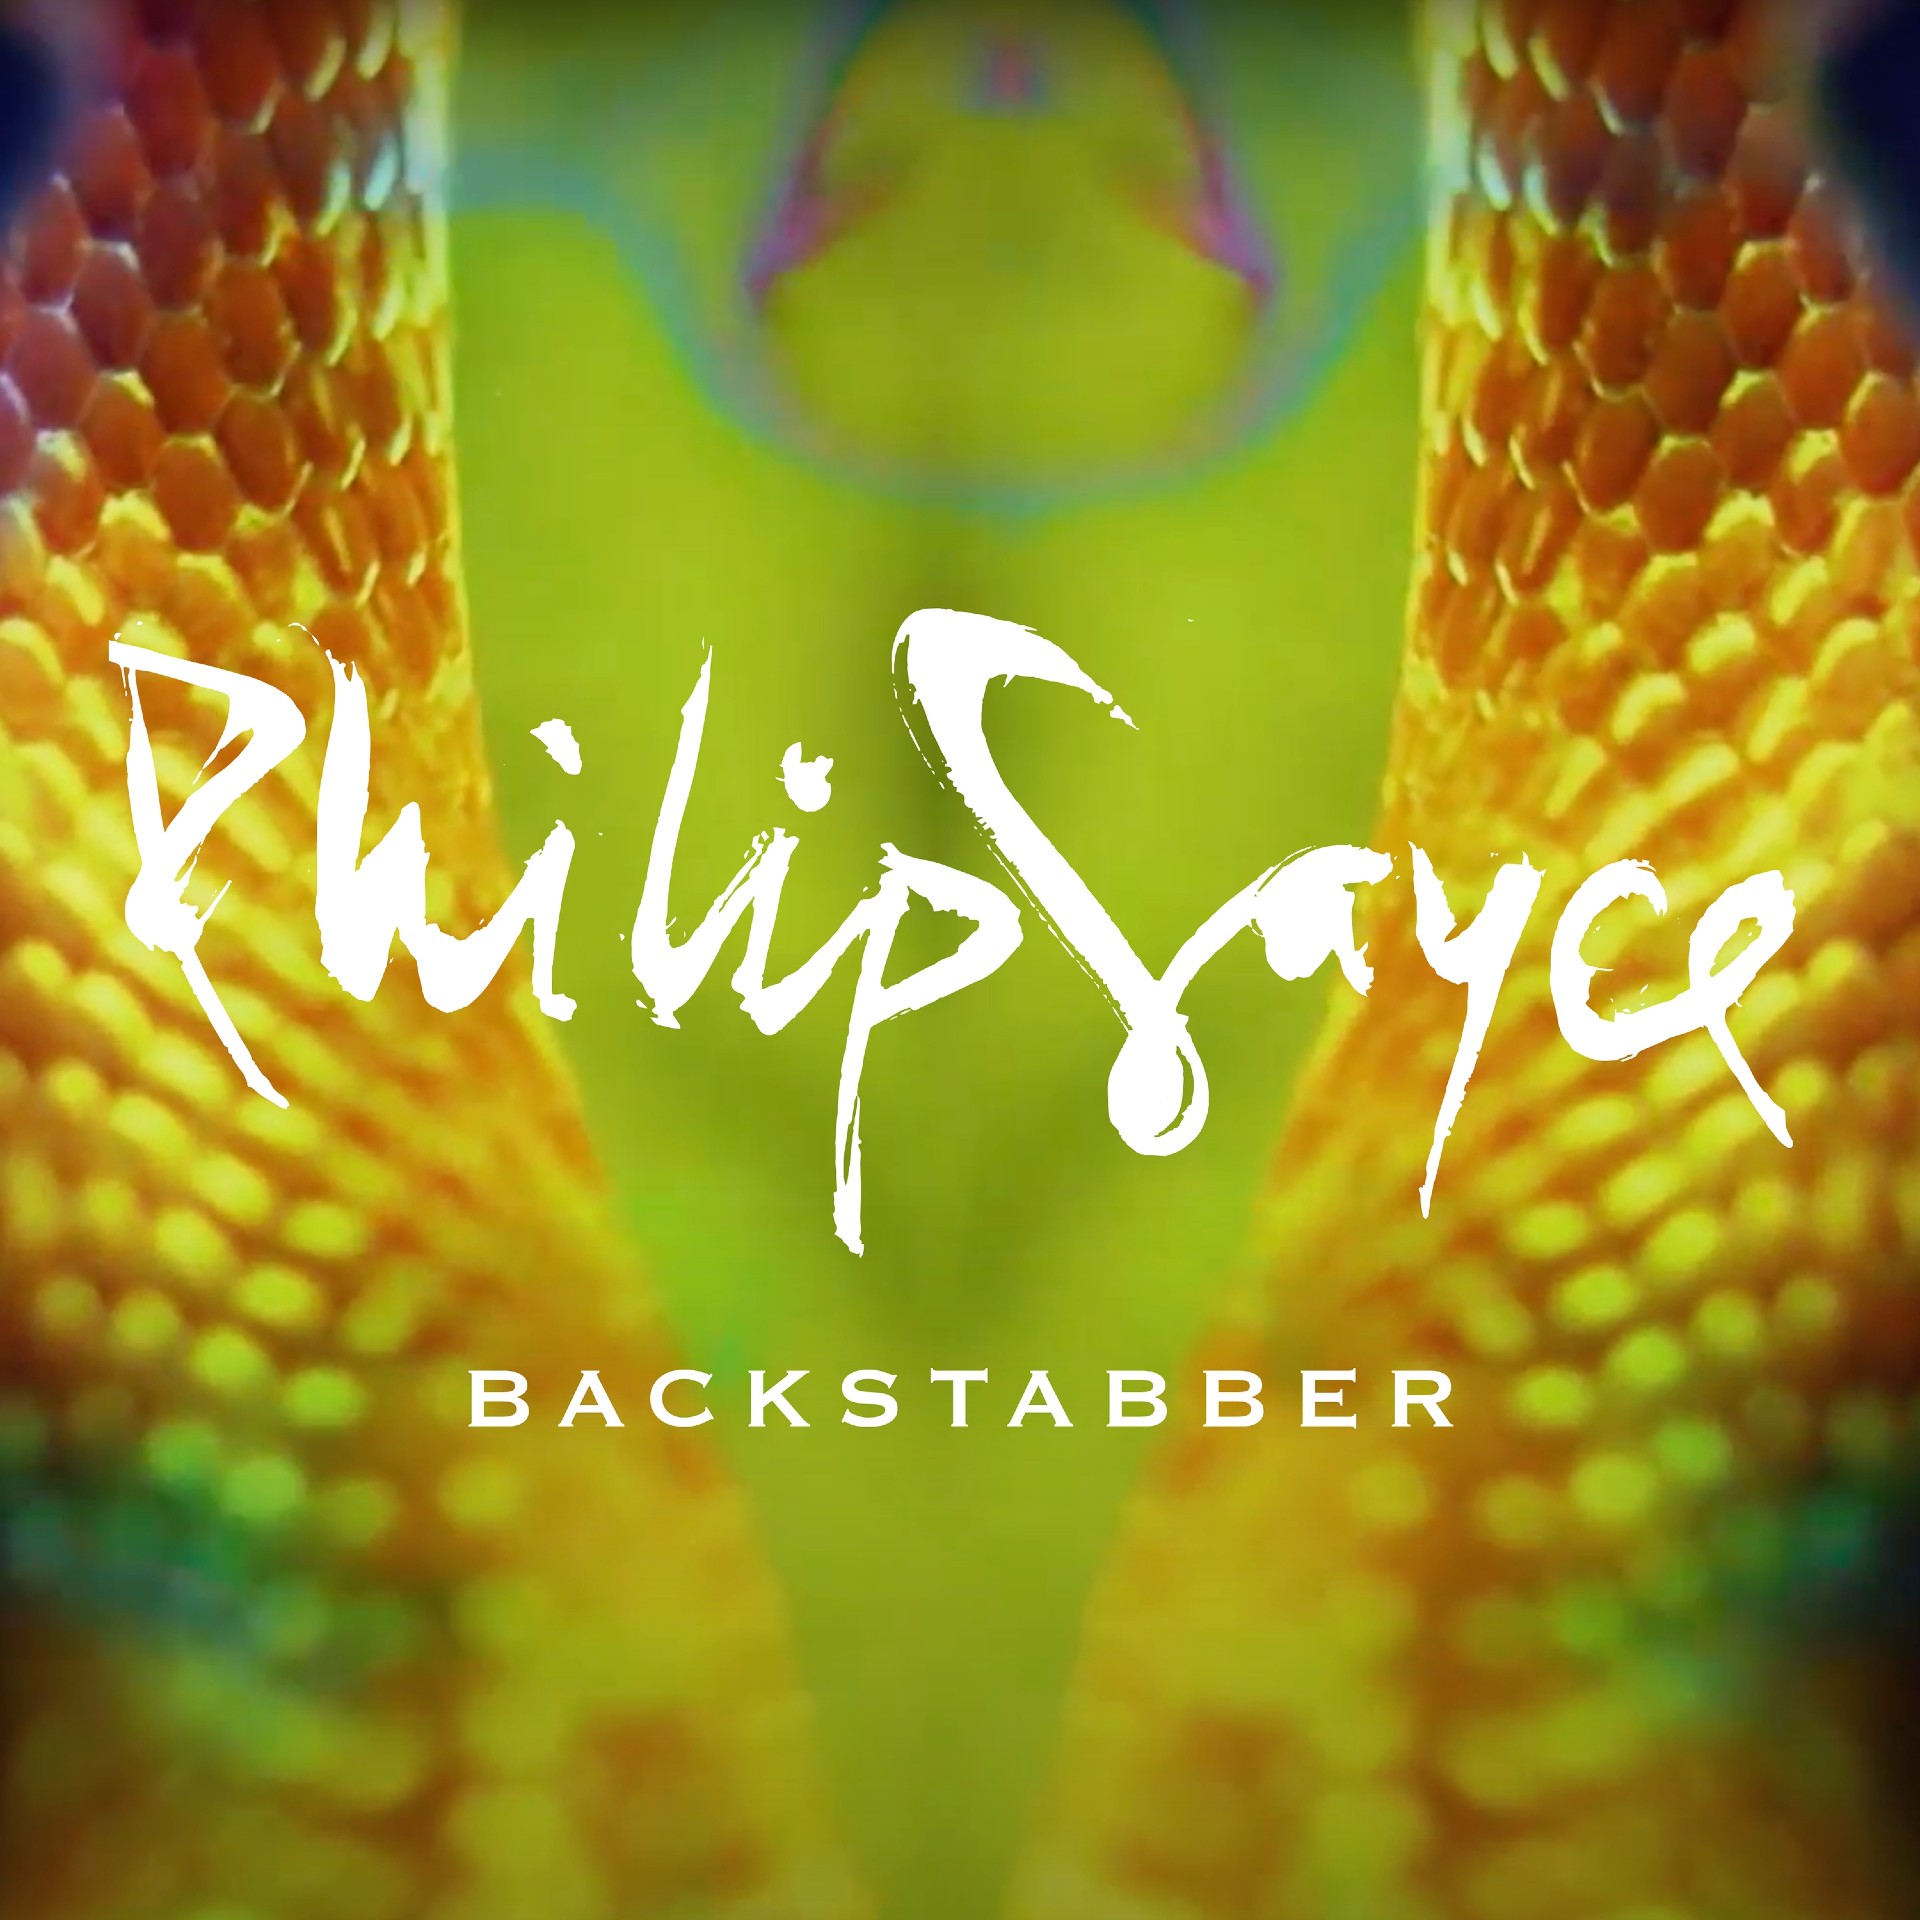 Philip Sayce “Backstabber” single artwork